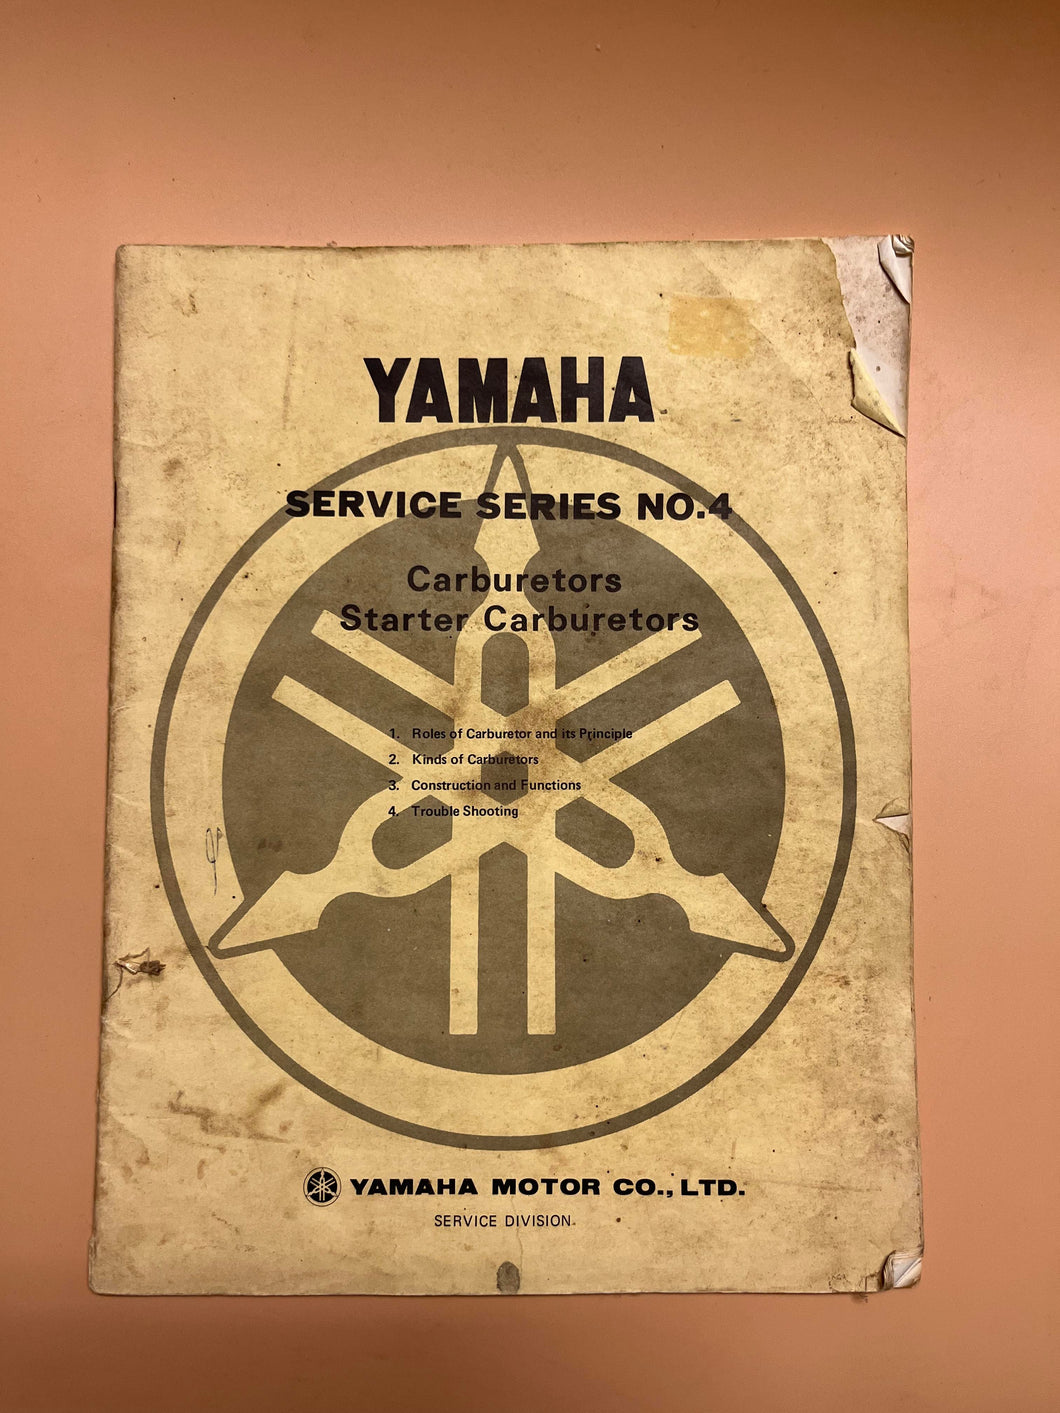 Yamaha Carburetors Service Manual